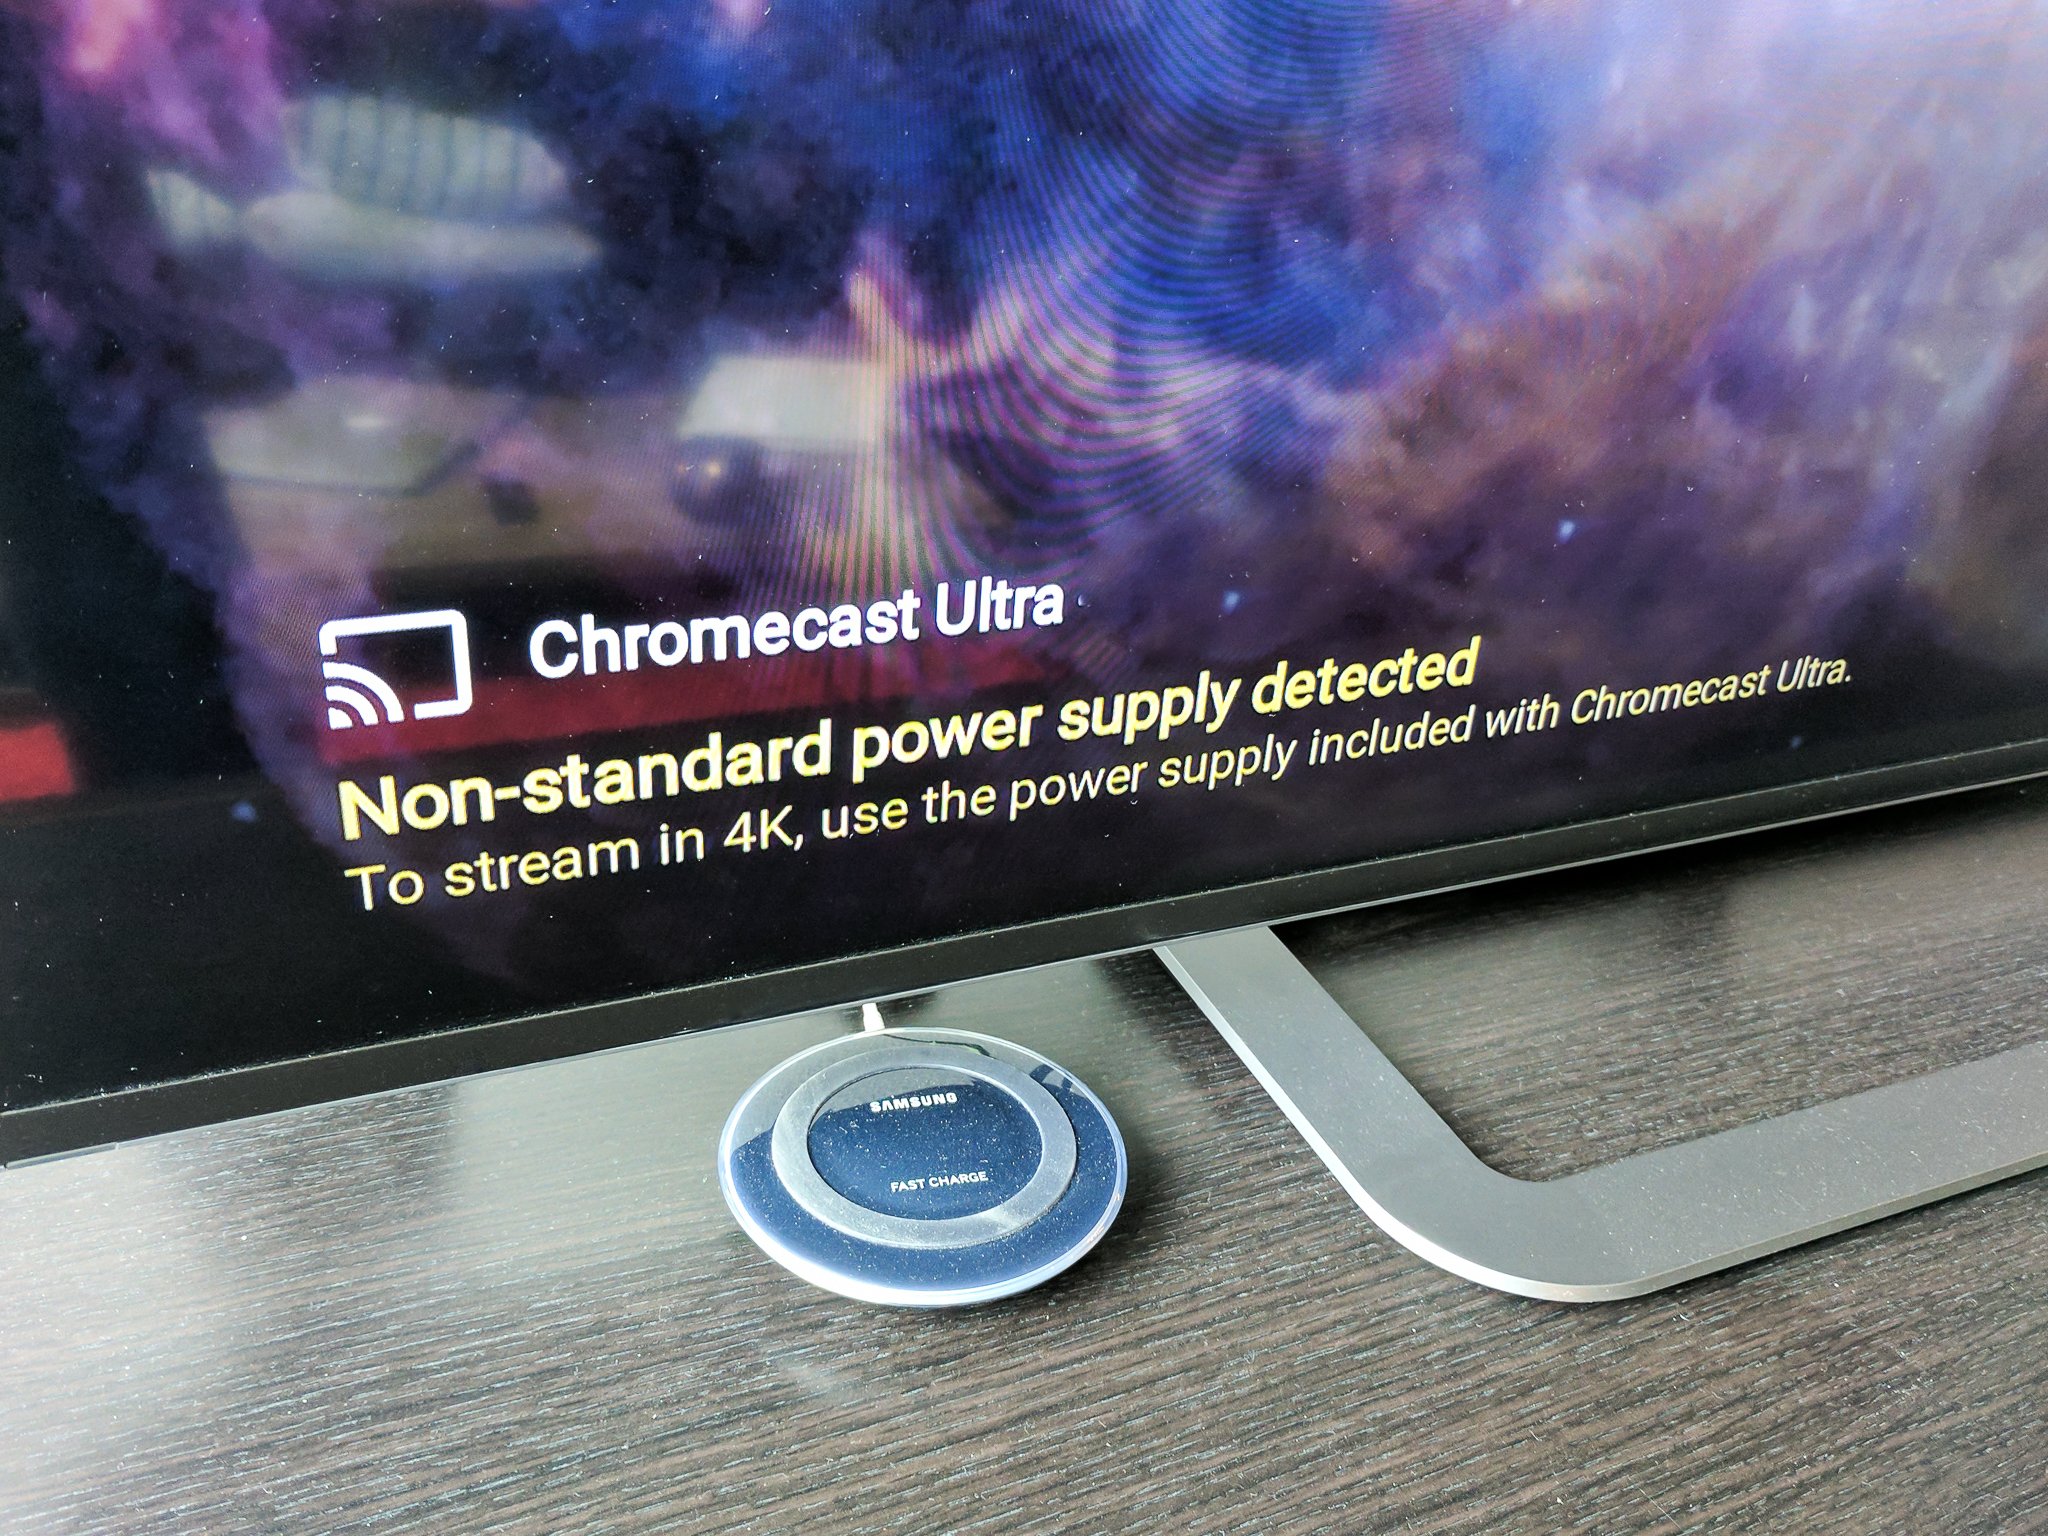 Chromecast Ultra power warning